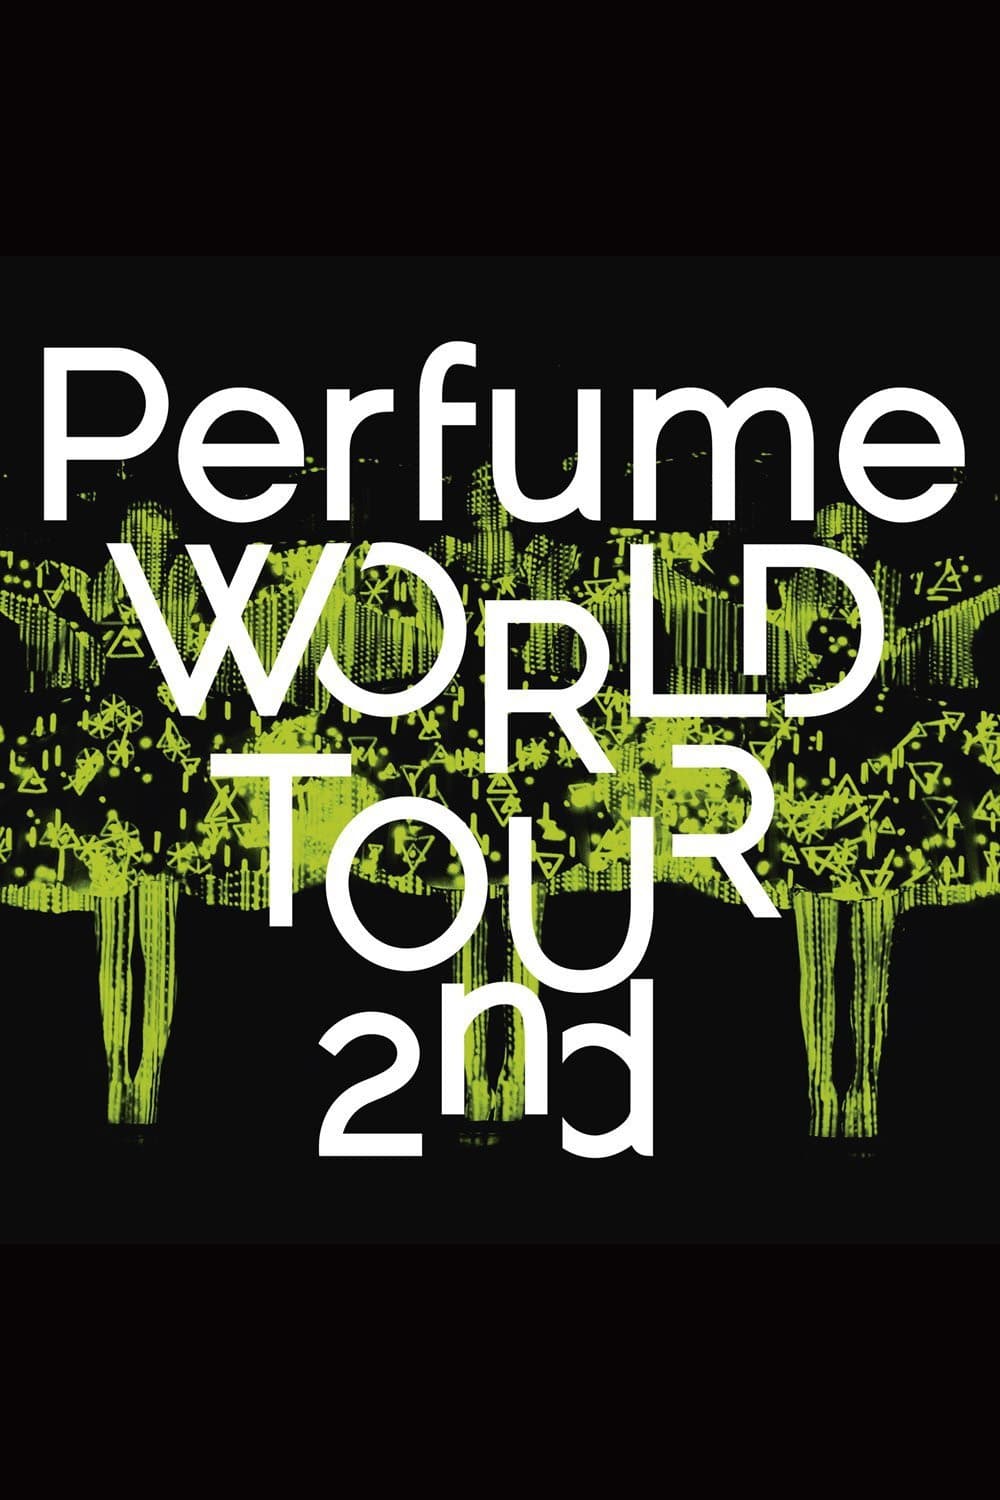 Perfume World Tour 2nd